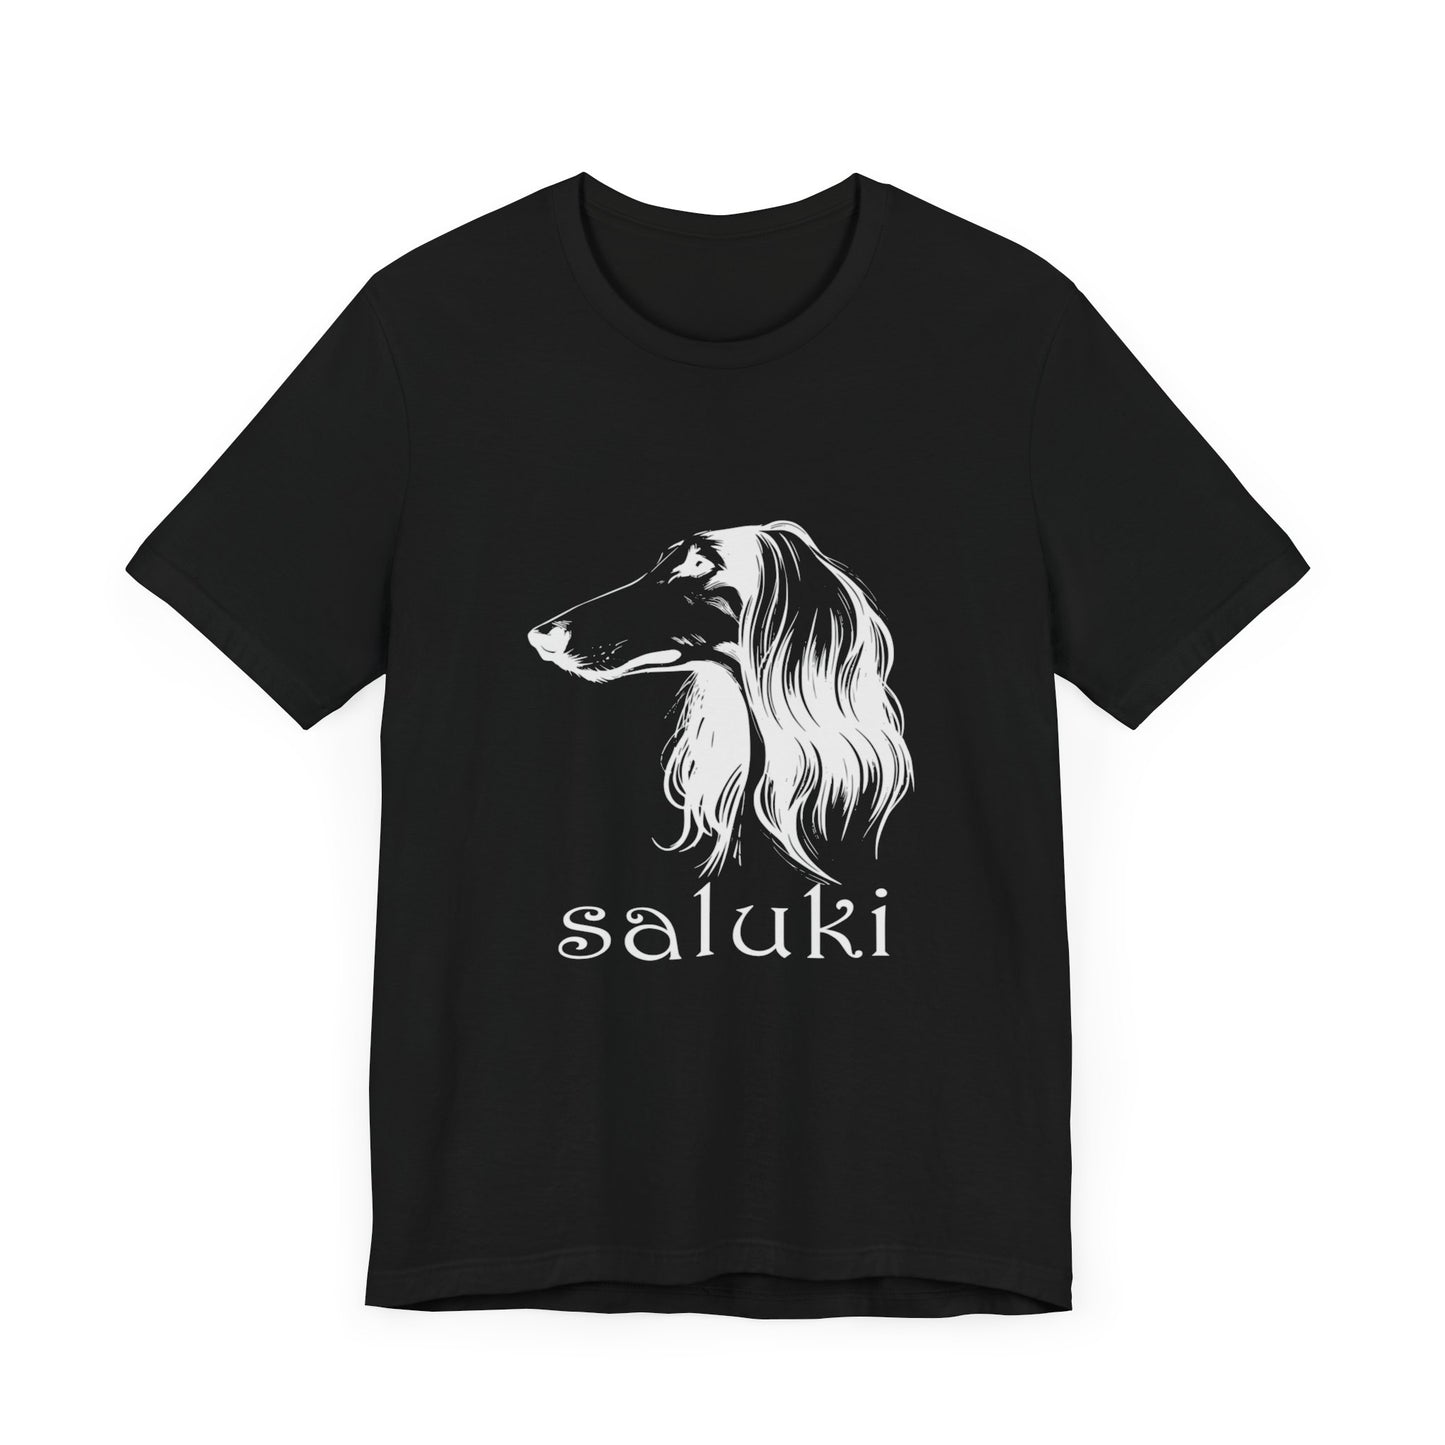 Unisex Jersey Short Sleeve Tee featuring a Saluki dog breed head study portrait - Style 1